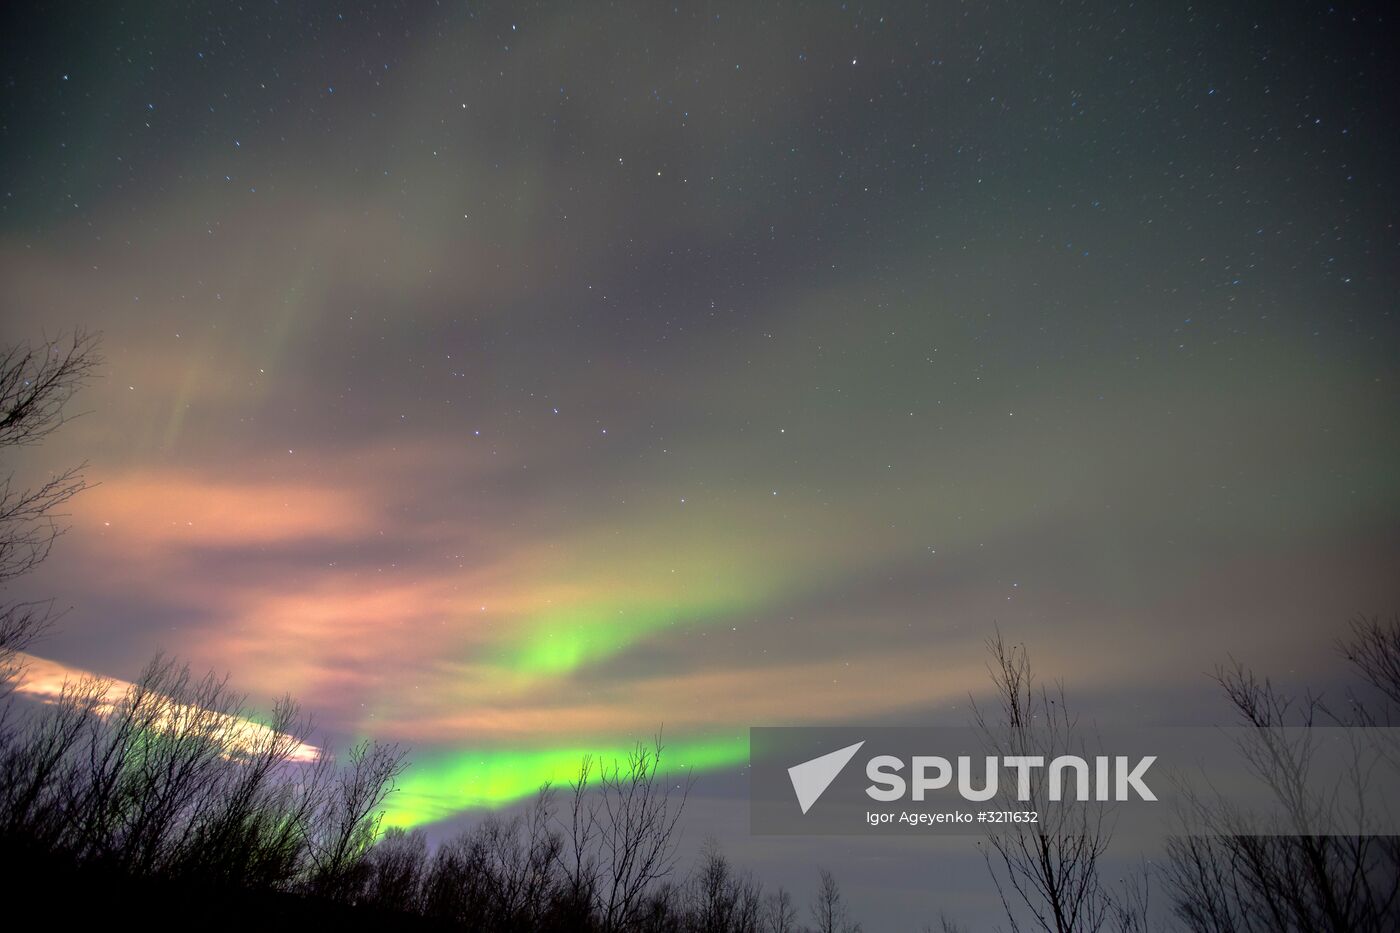 Northern lights in Murmansk region